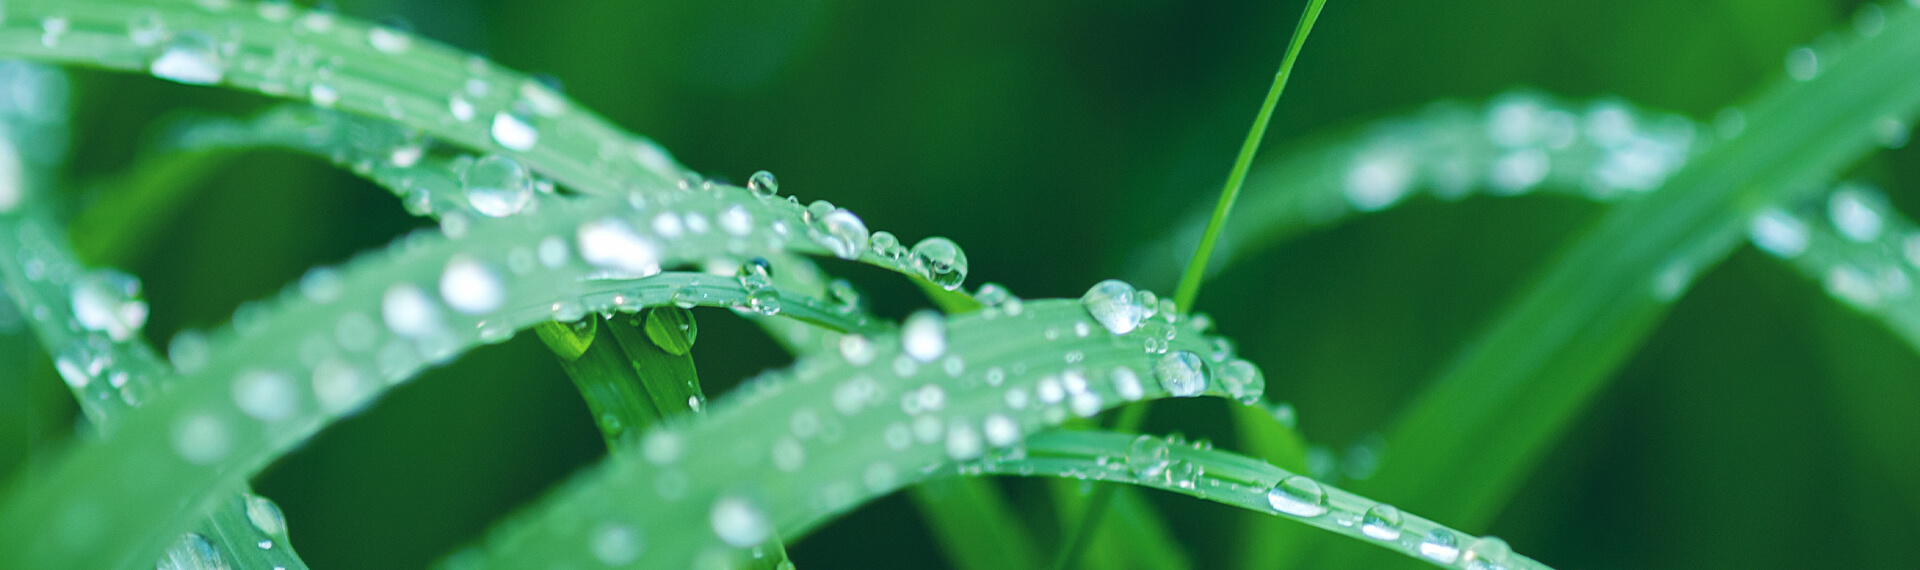 Image of water raining on grass blades